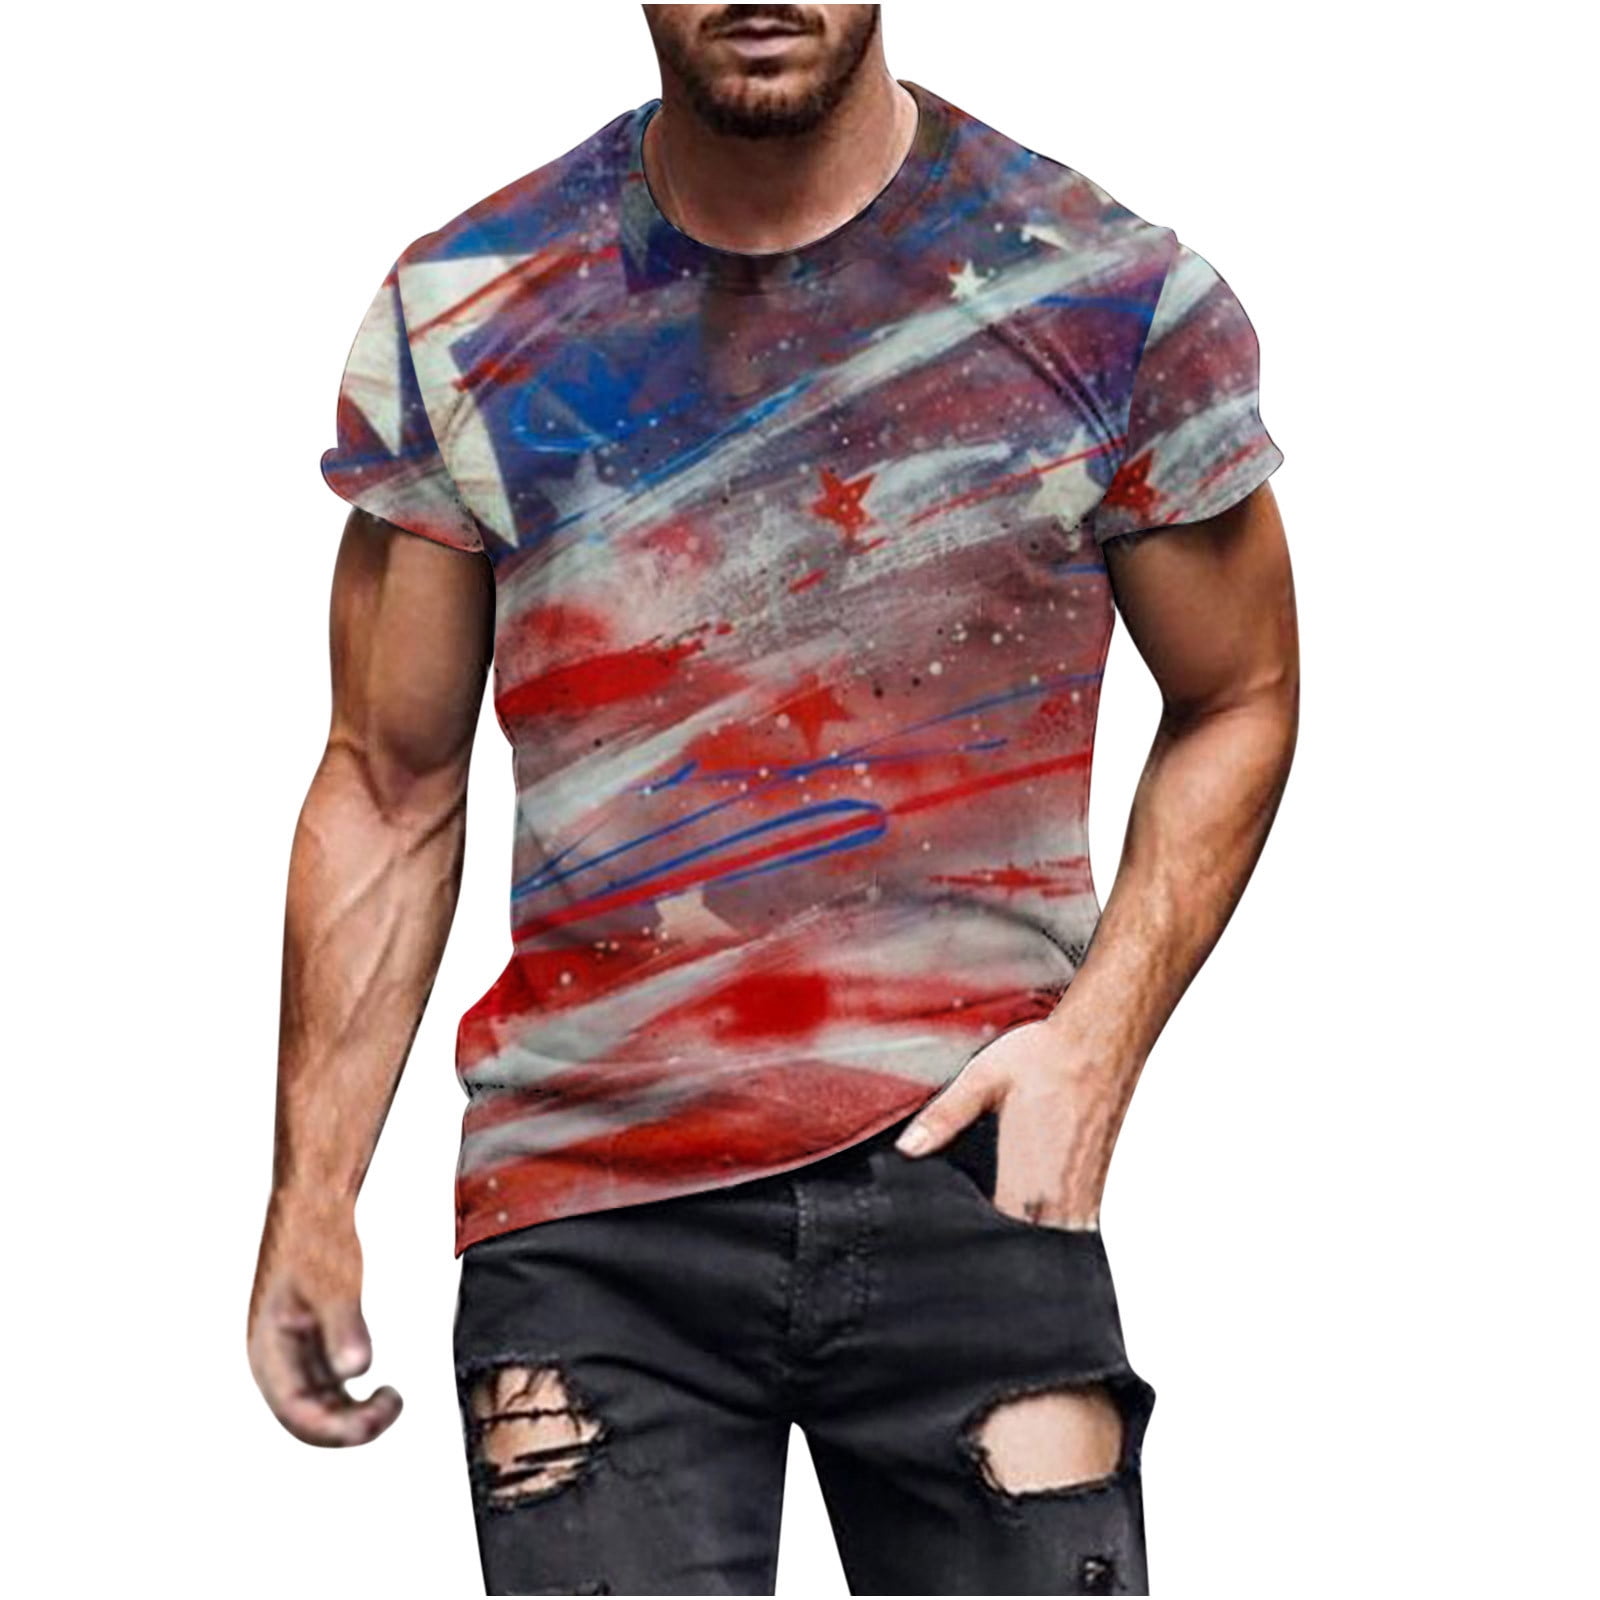 DDAPJ pyju Men Patriotic Short Sleeve T Shirts Stars Stripes Patchwork  Print Shirts Summer Casual Slim Fit Athletic Muscle Tops 